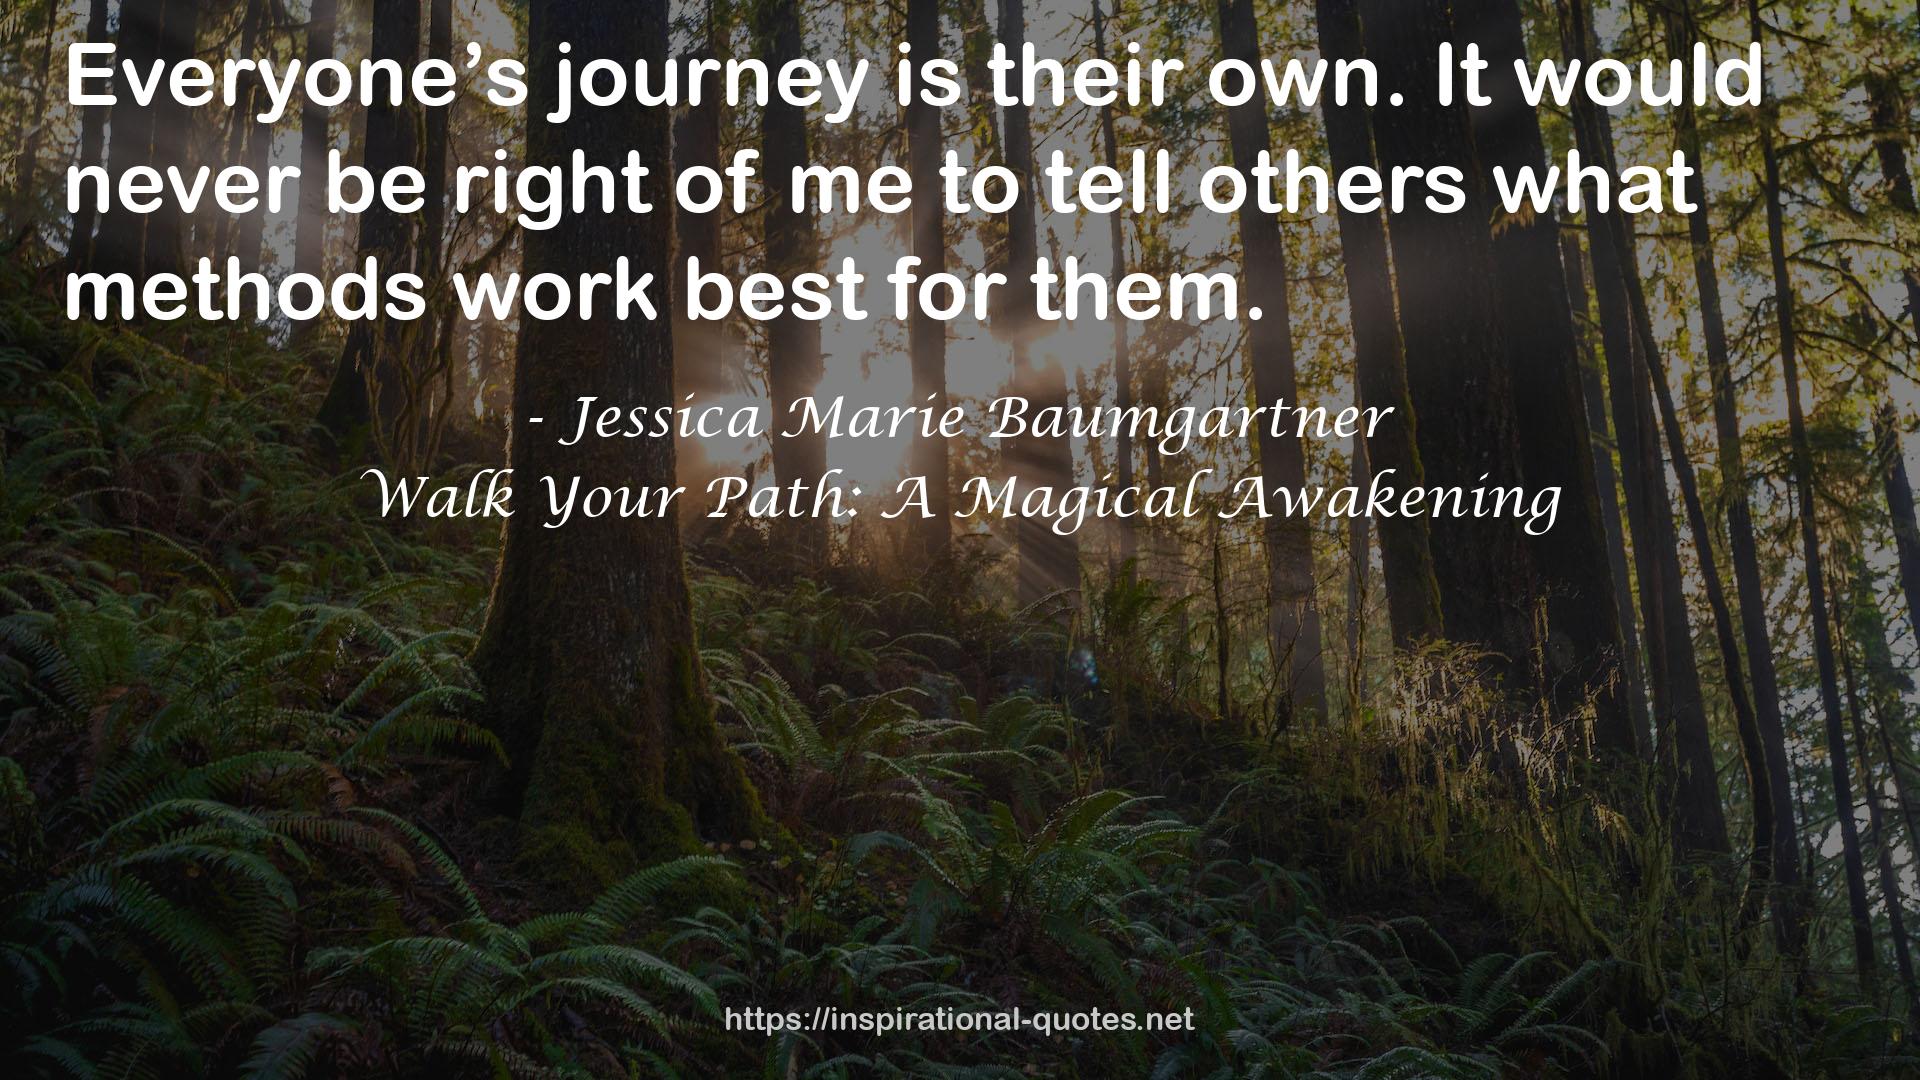 Walk Your Path: A Magical Awakening QUOTES